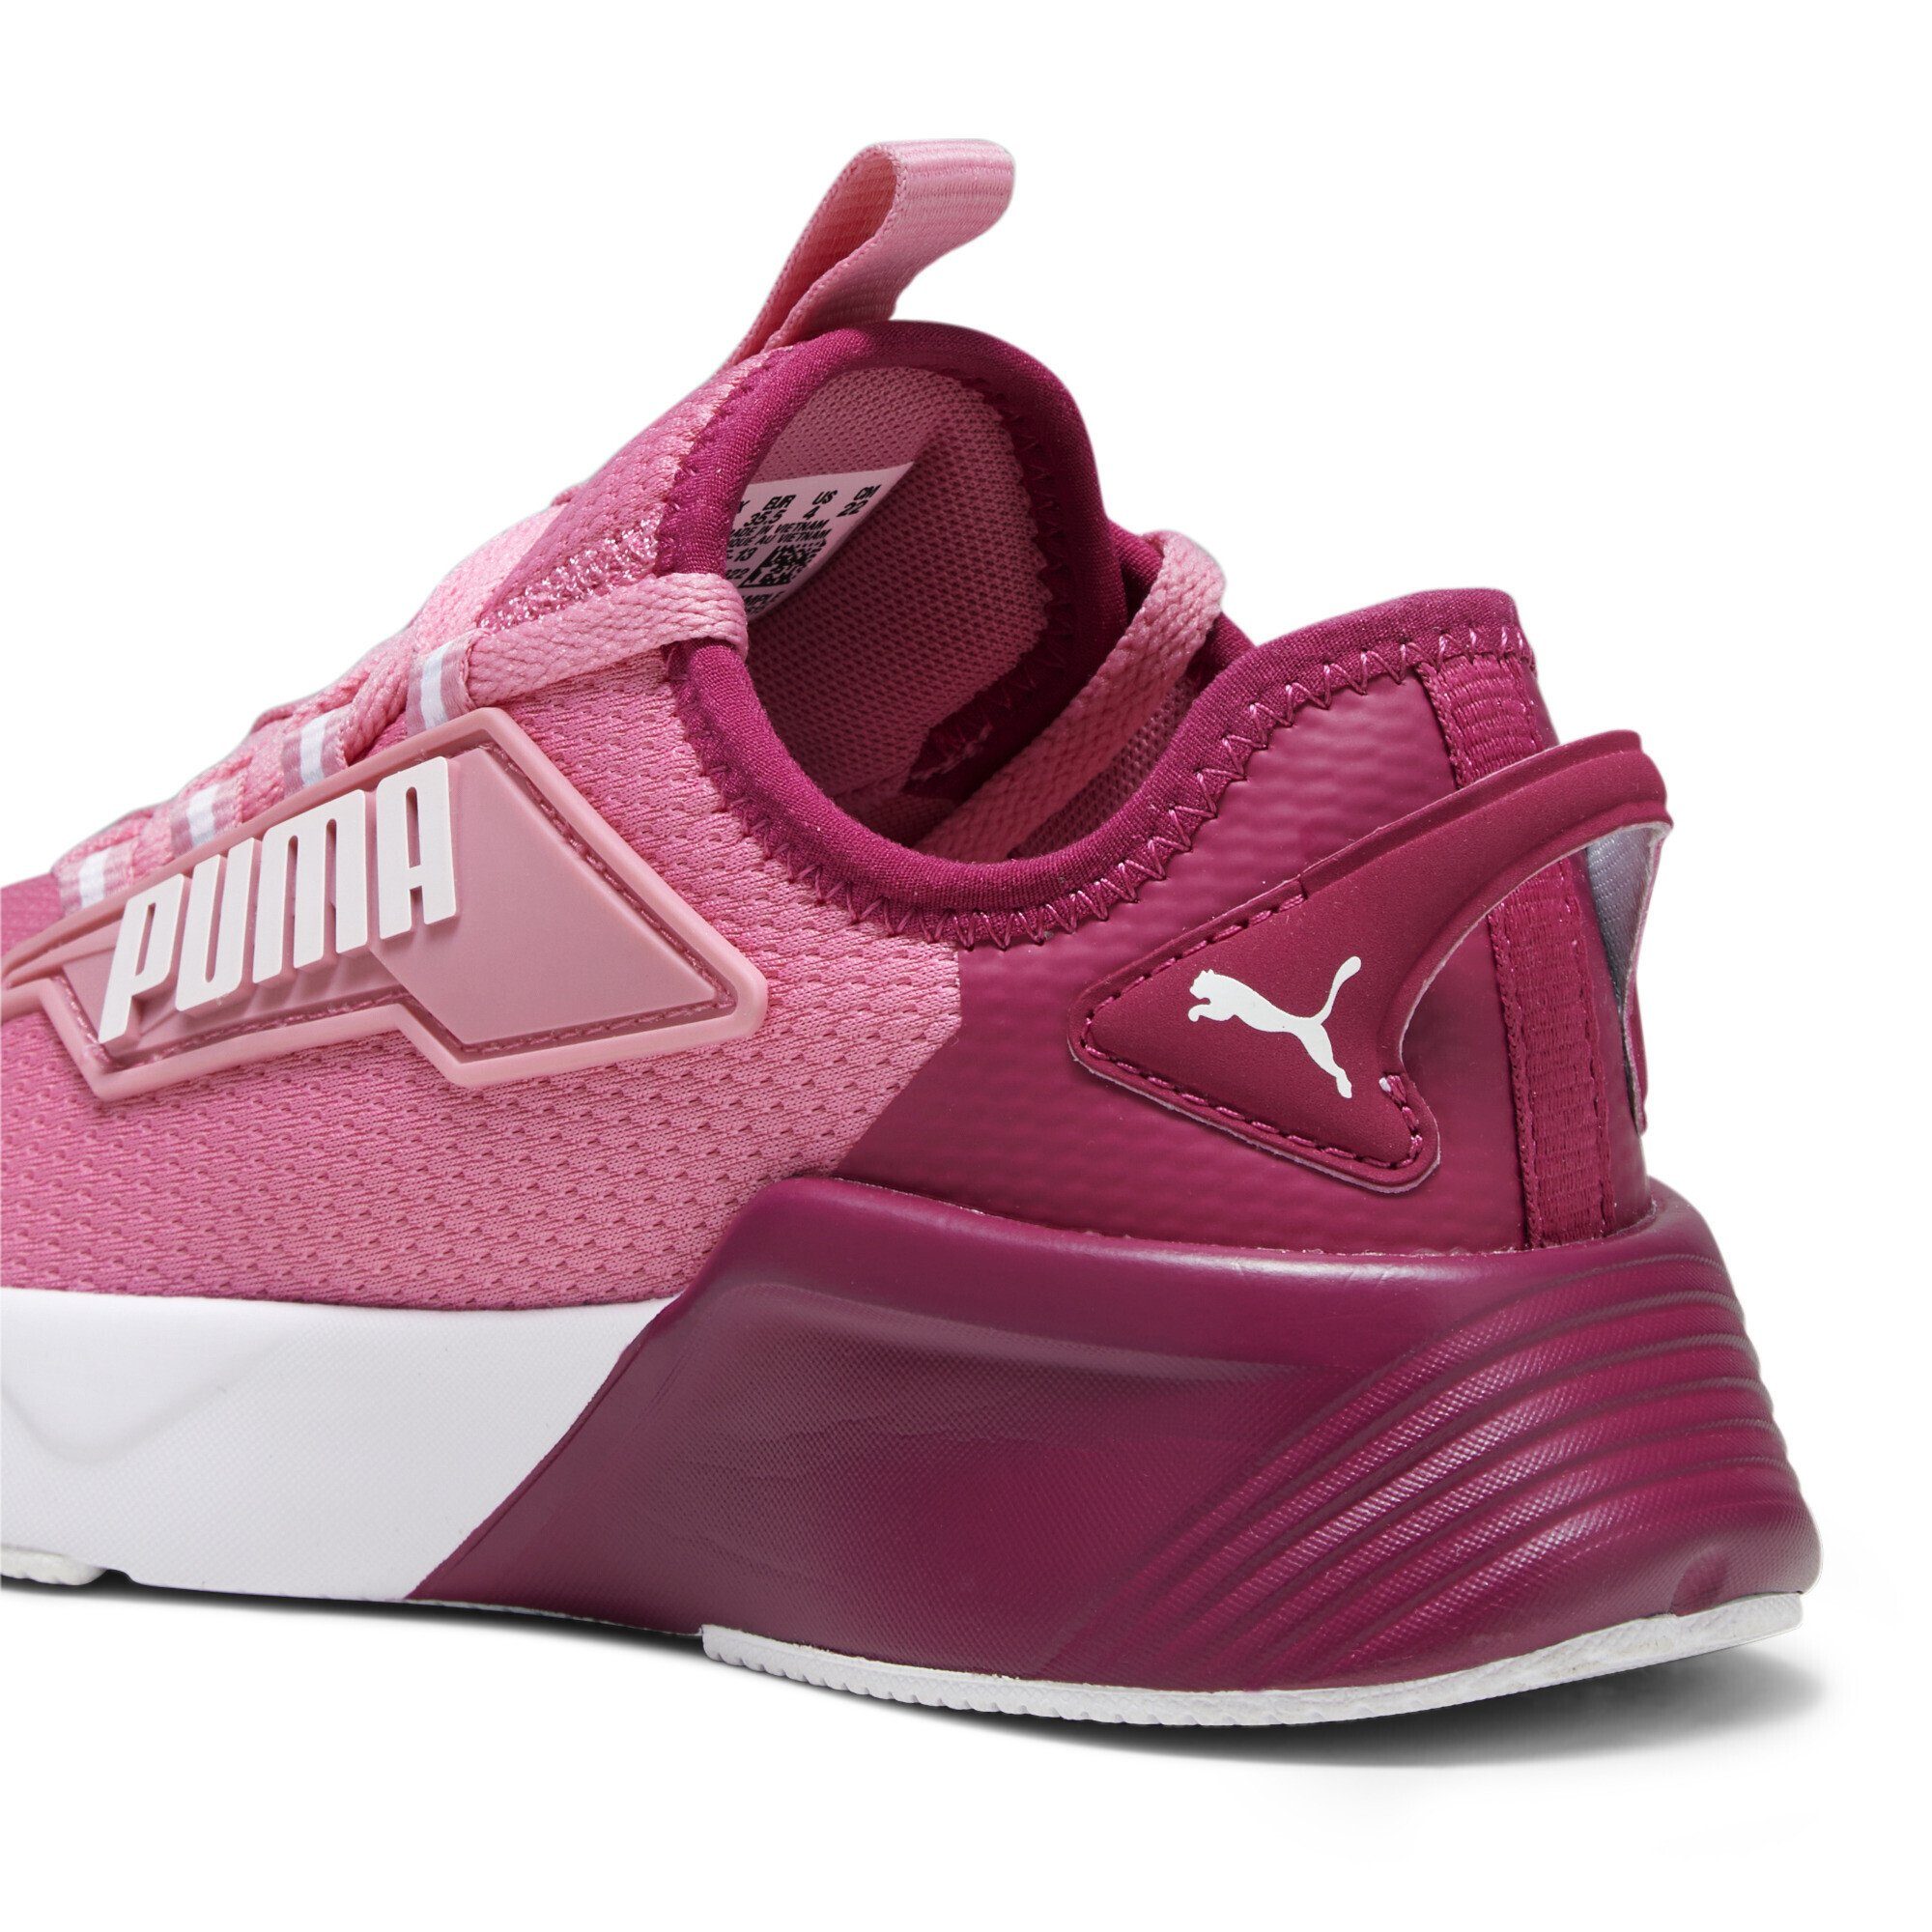 Burst Jugendliche Pinktastic 2 PUMA Laufschuh Pink Retaliate White Strawberry Sneakers